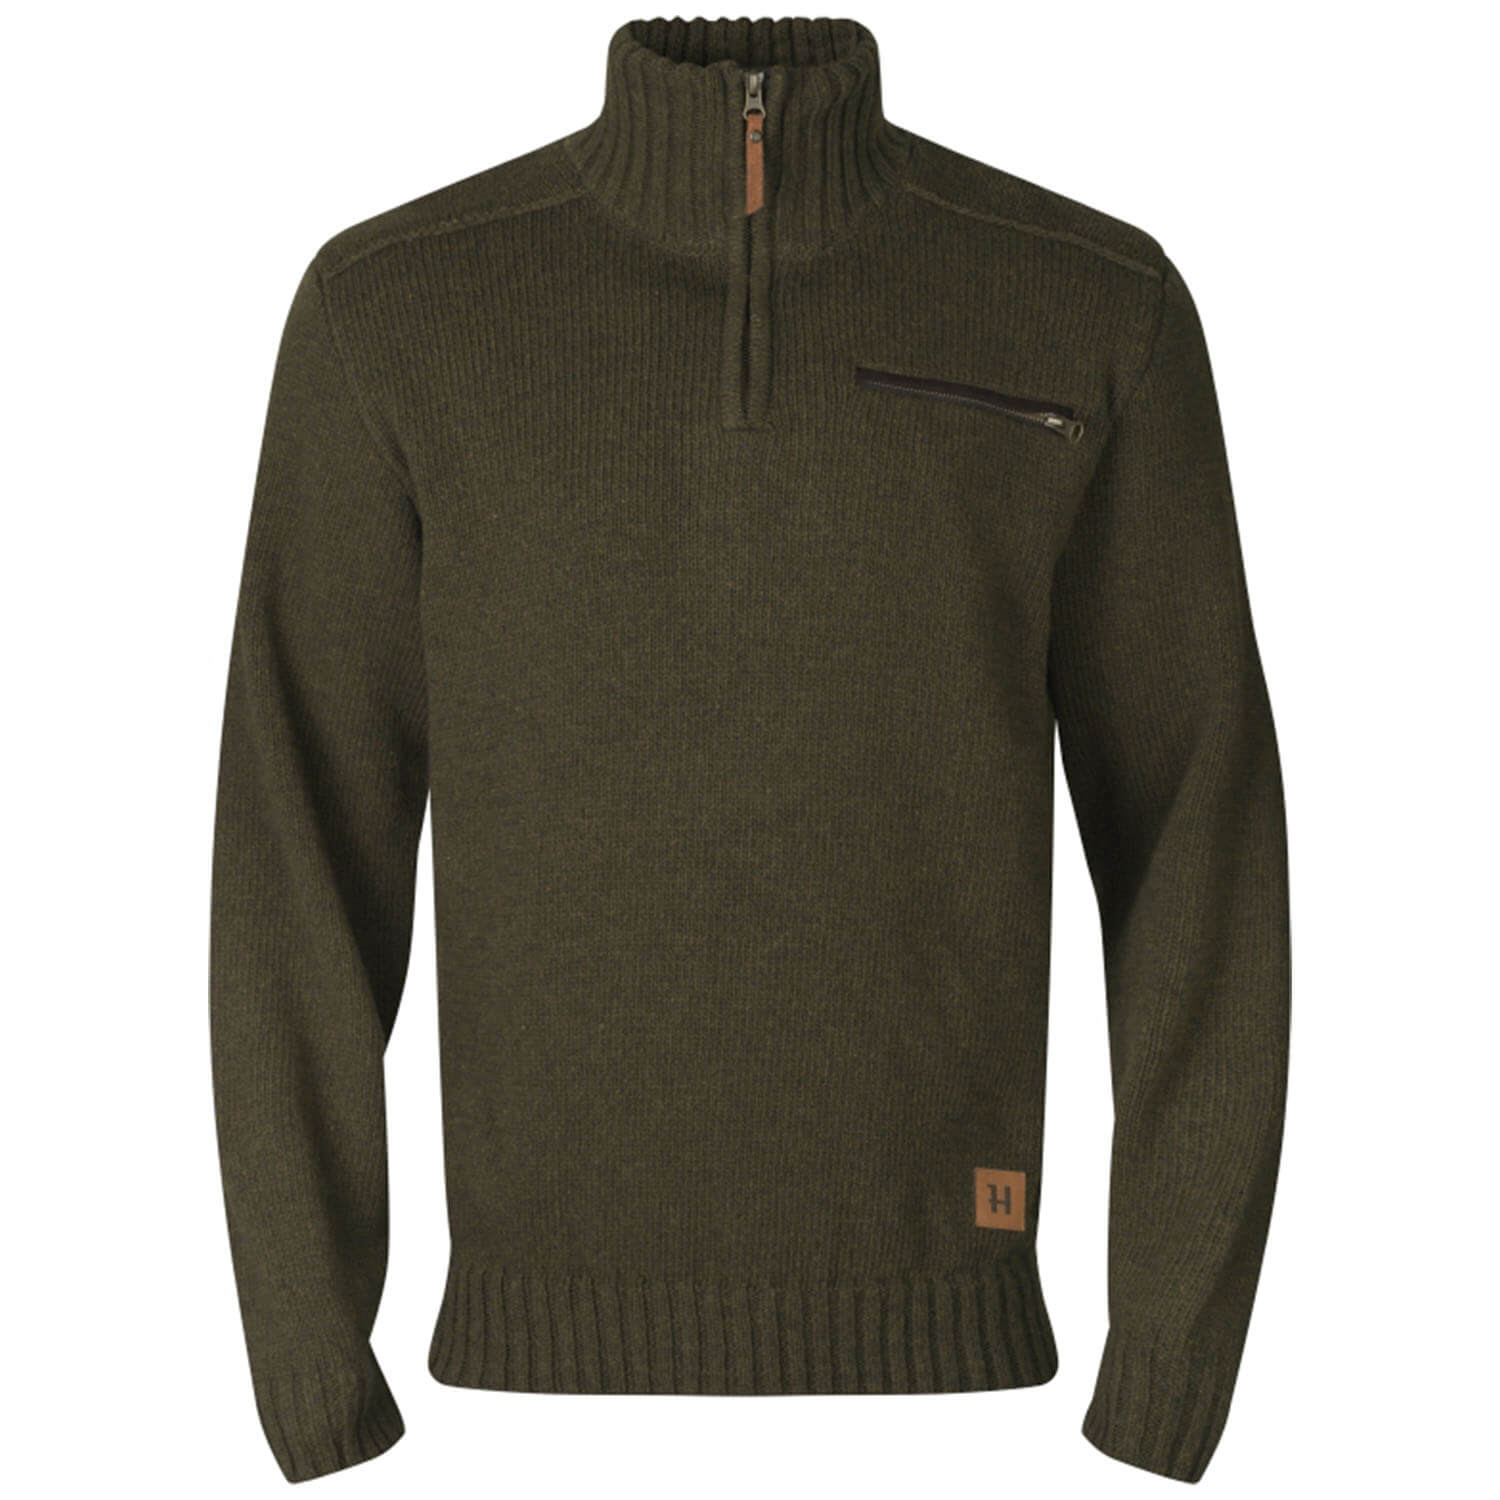 Härkila sweater annaboda 2.0 HSP (willow green) - Sweaters & Jerseys